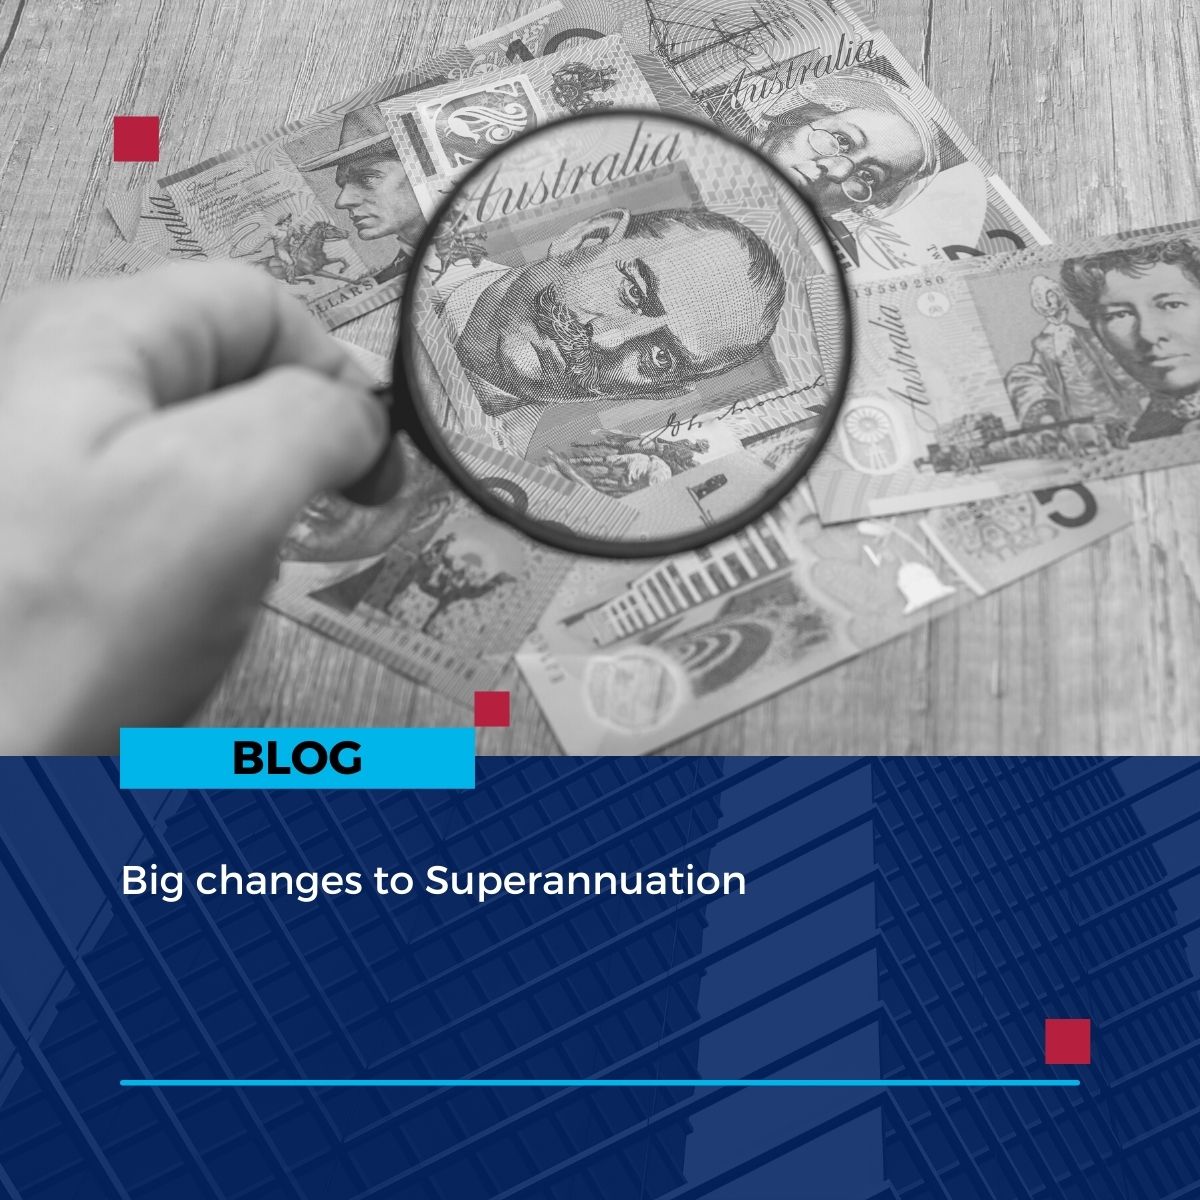 Big changes to superannuation